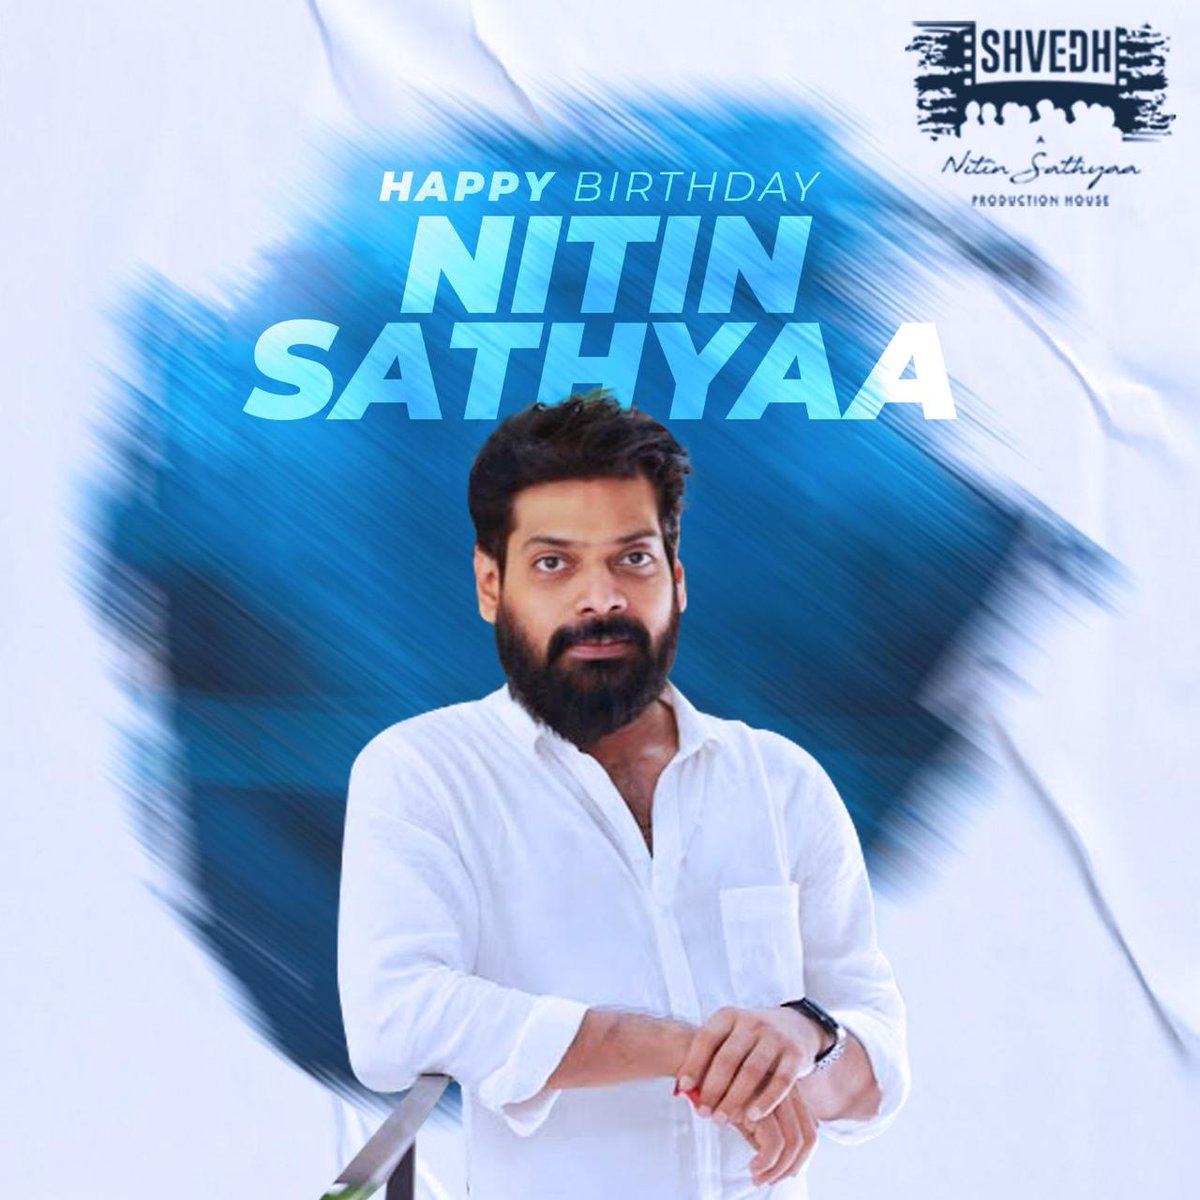 Happy Birthday Actor Producer @Nitinsathyaa 

#HBDNitinSathyaa

@shvedhgroup @teamaimpr